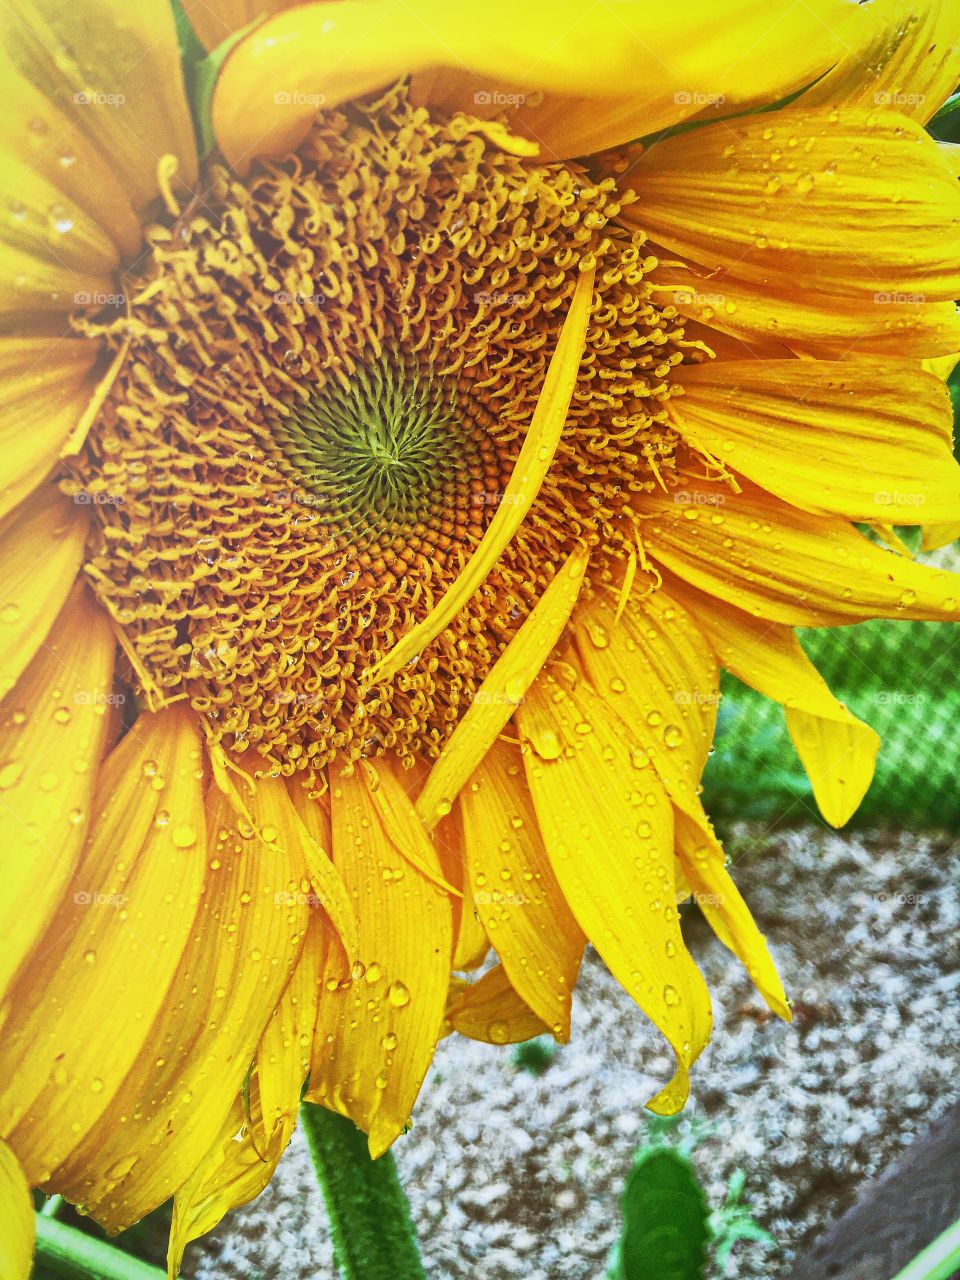 Sunny day. Sunflower in my garden